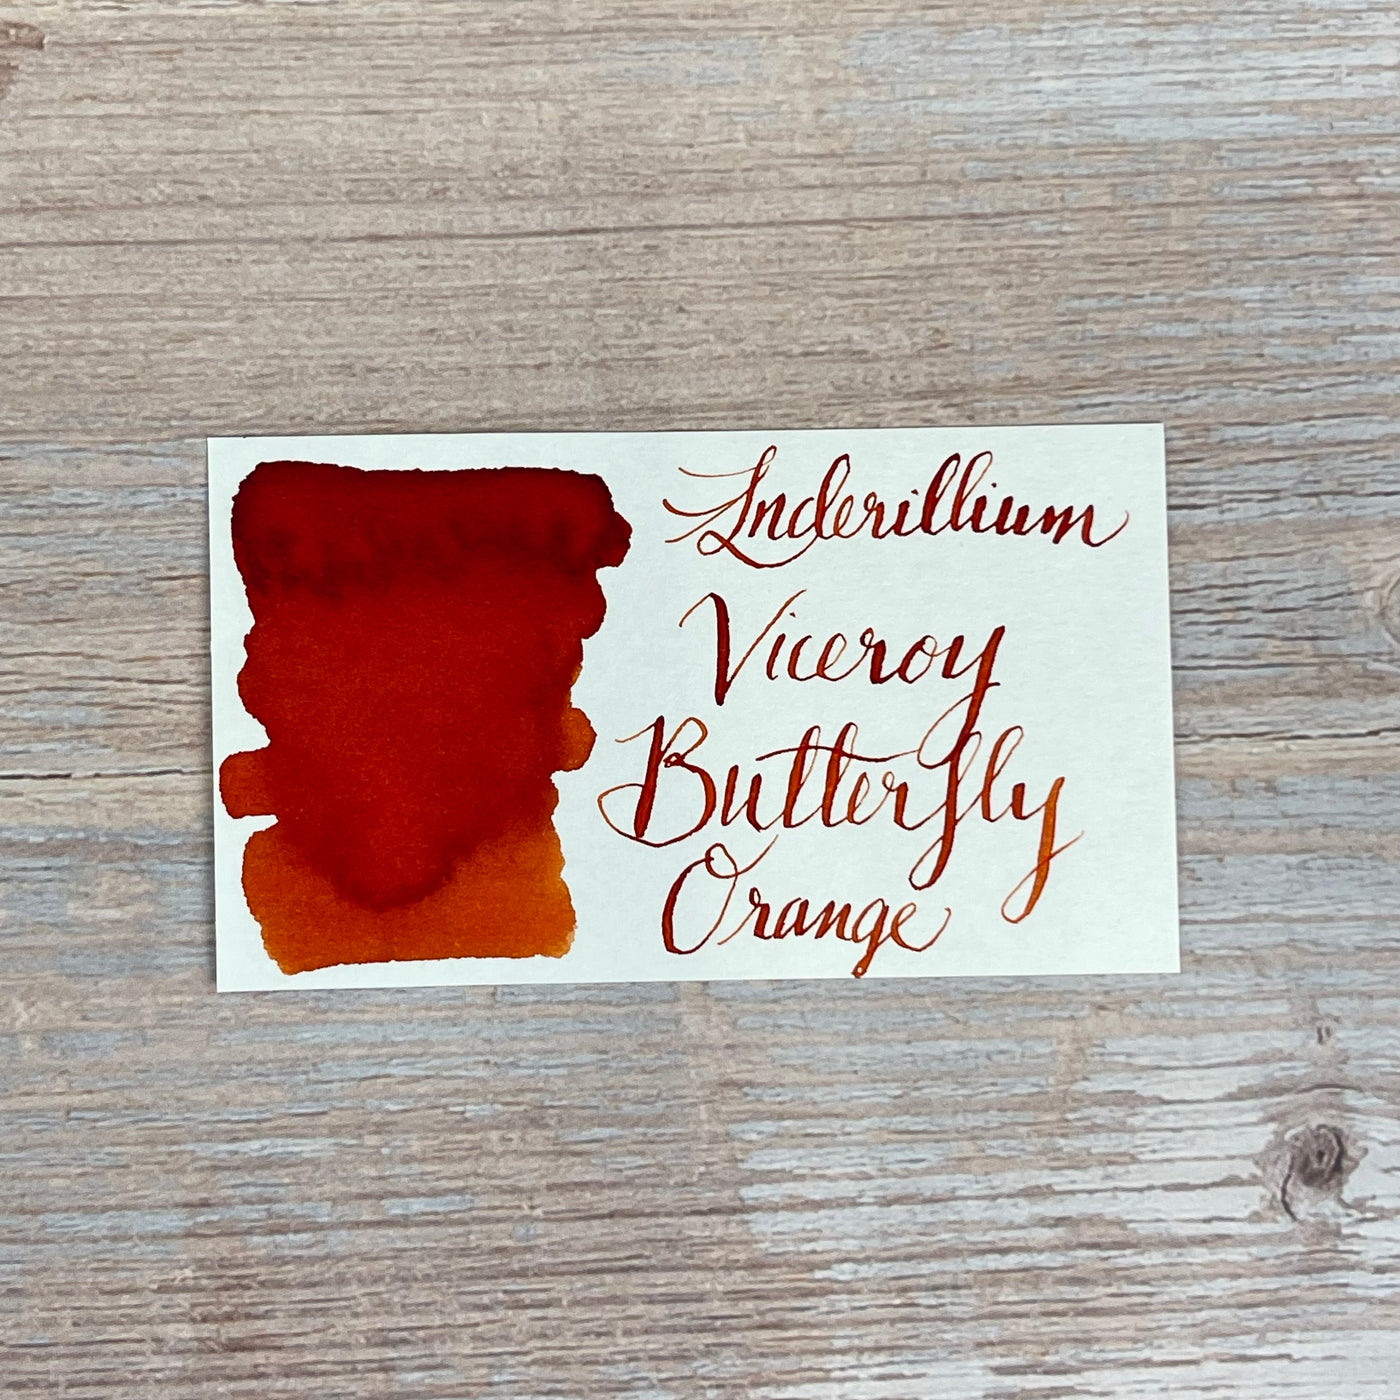 Anderillium Viceroy Butterfly Orange - 1.5 Oz Bottled Ink